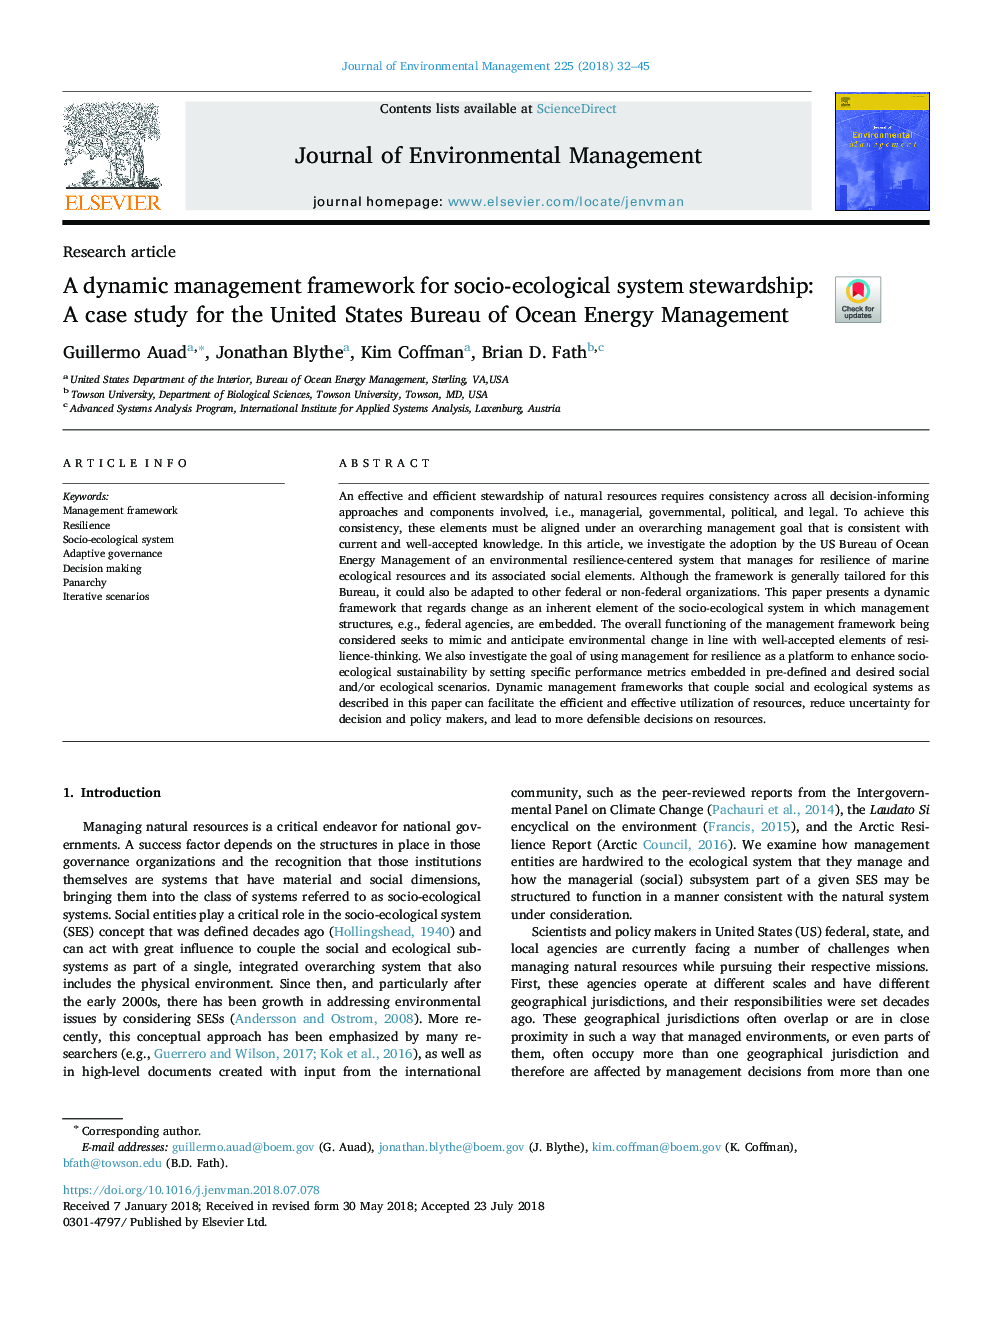 A dynamic management framework for socio-ecological system stewardship: A case study for the United States Bureau of Ocean Energy Management